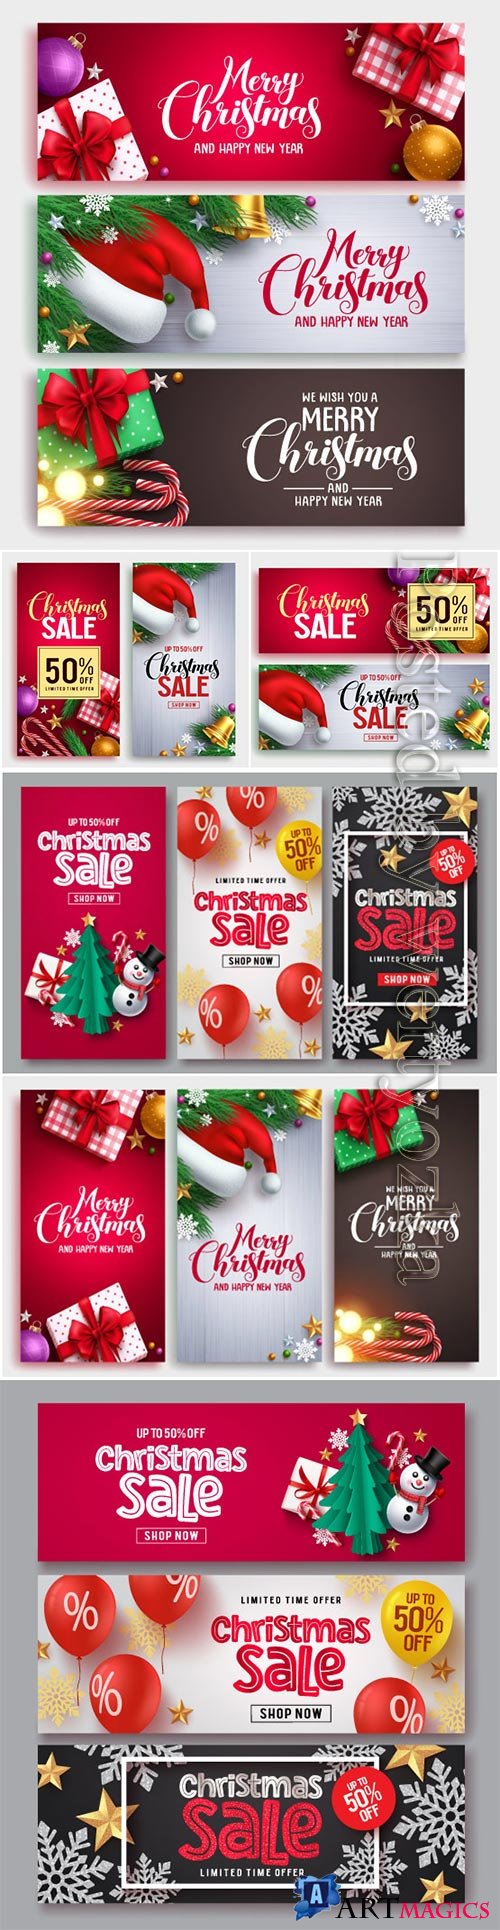 Christmas sale vector banner set